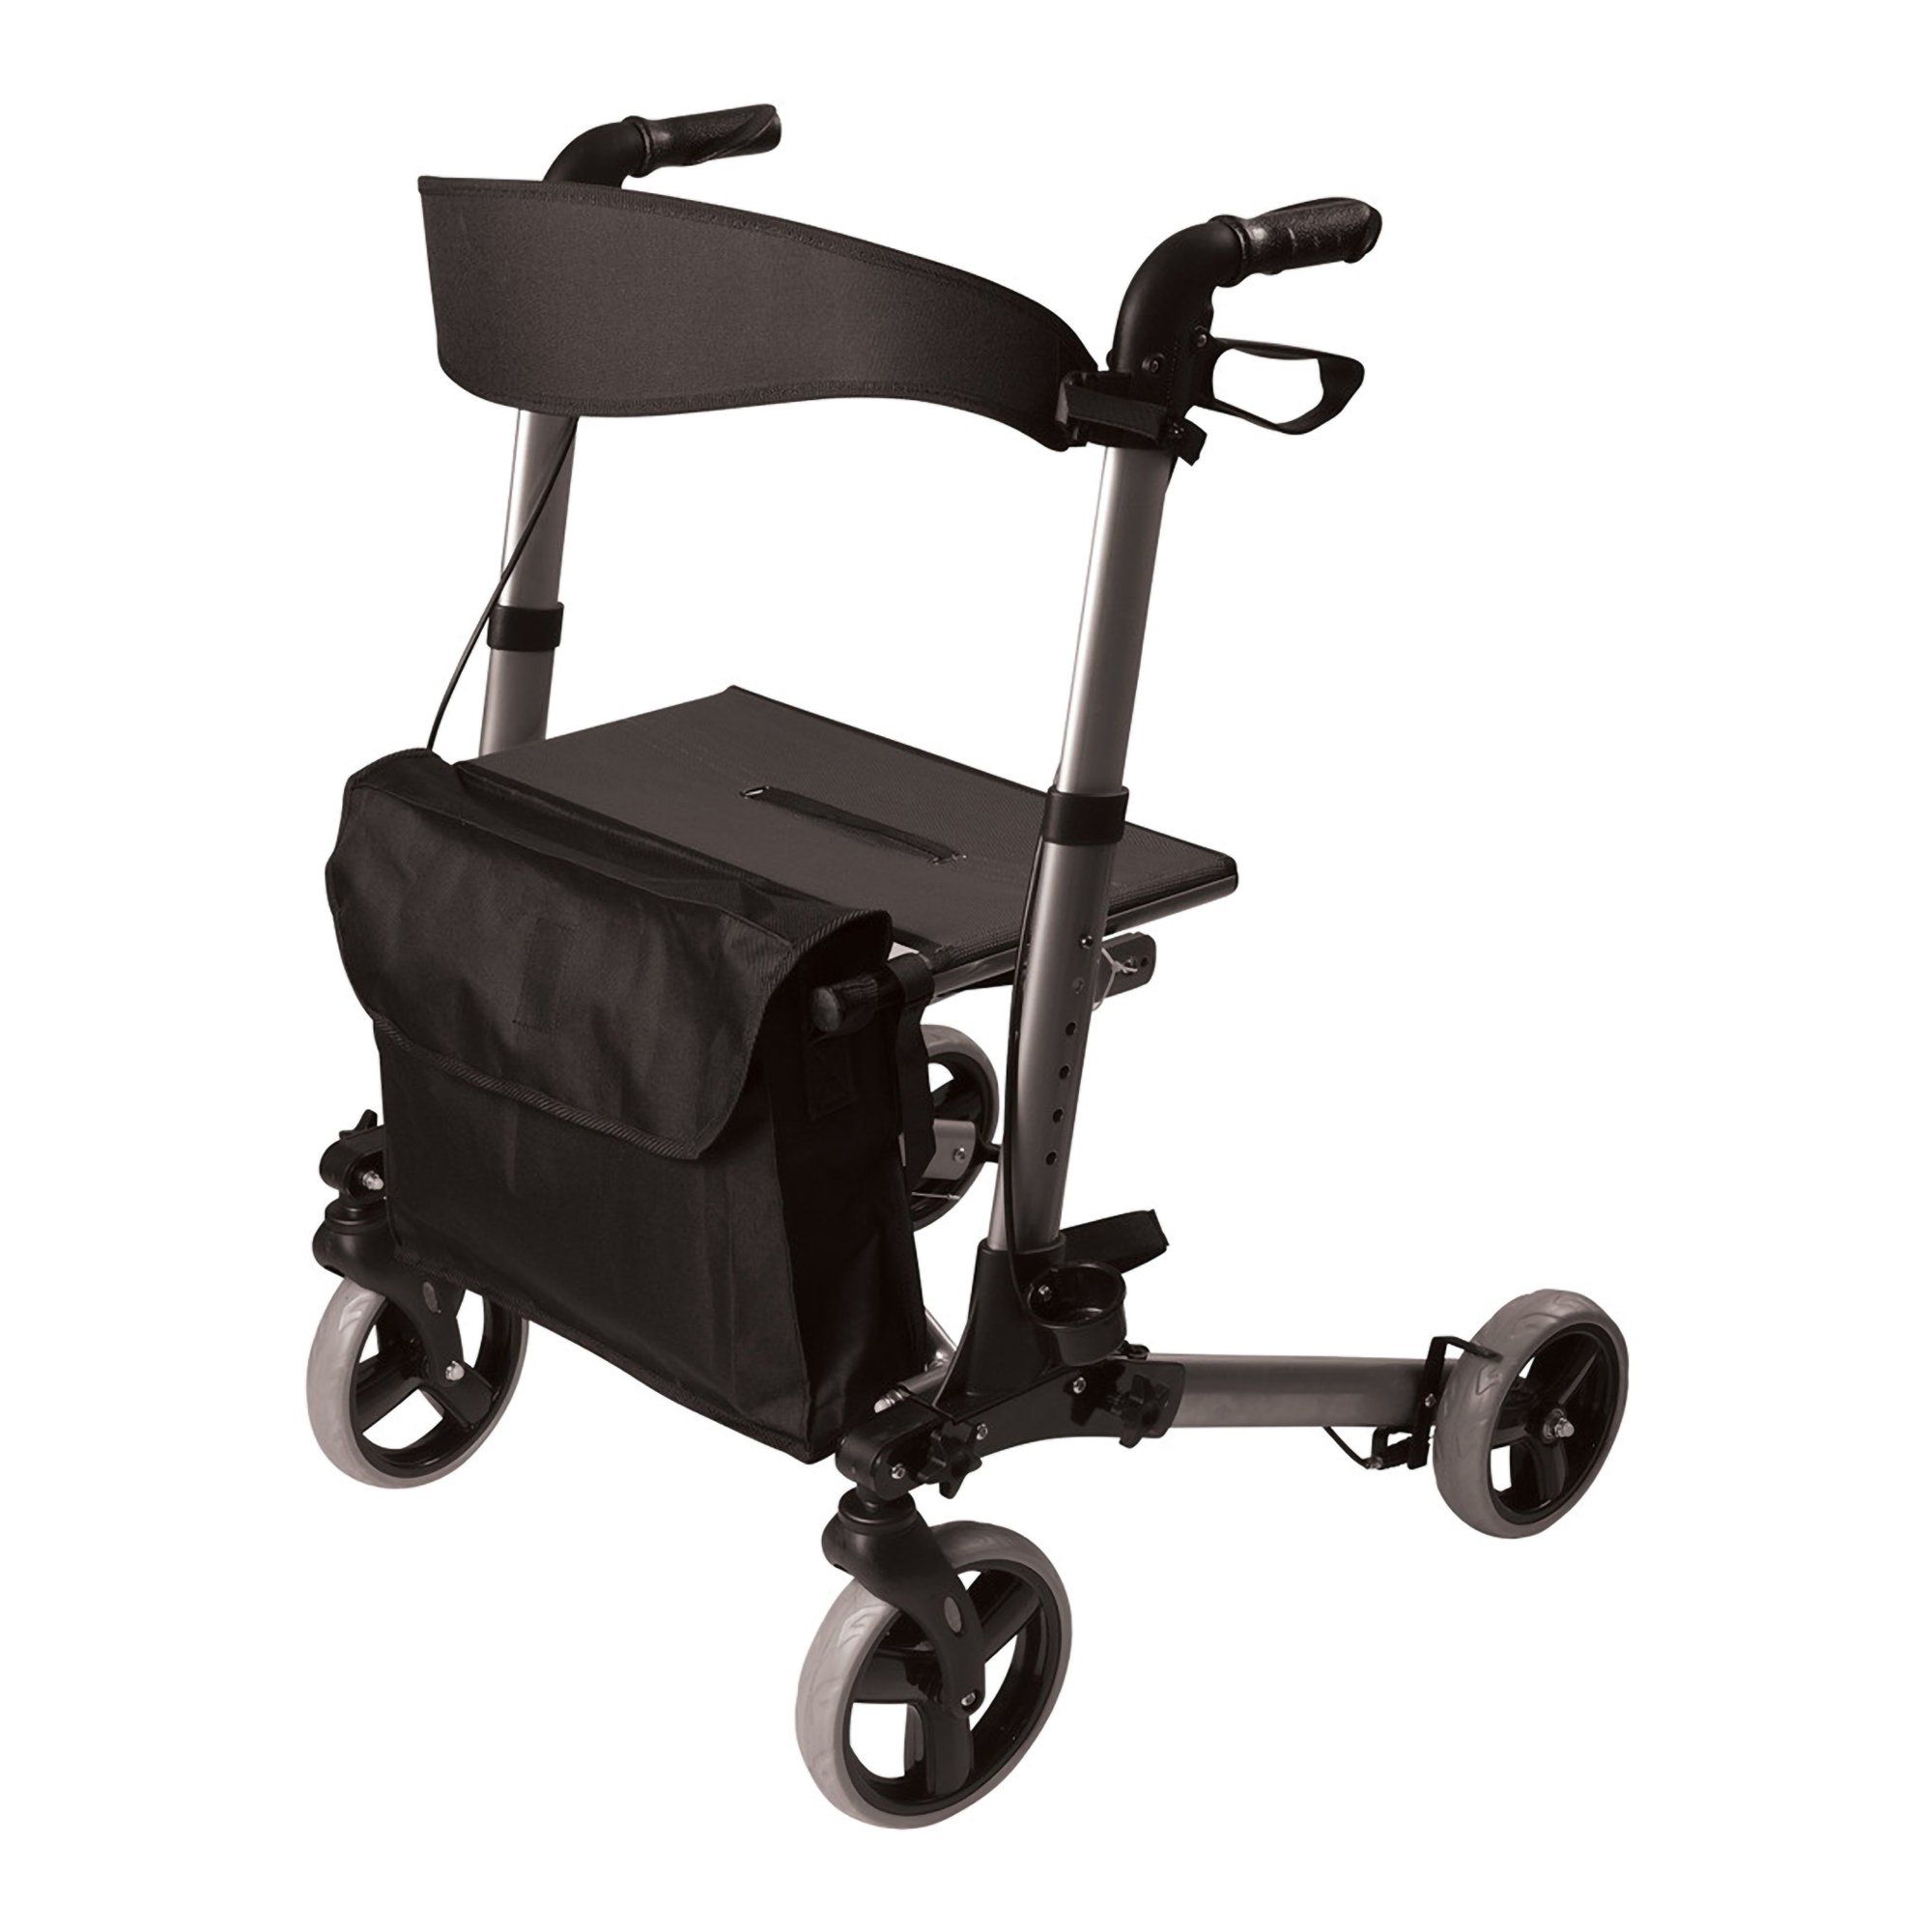 HealthSmart Walker Rollator with Seat & Backrest, Titanium - 300 lbs Capacity